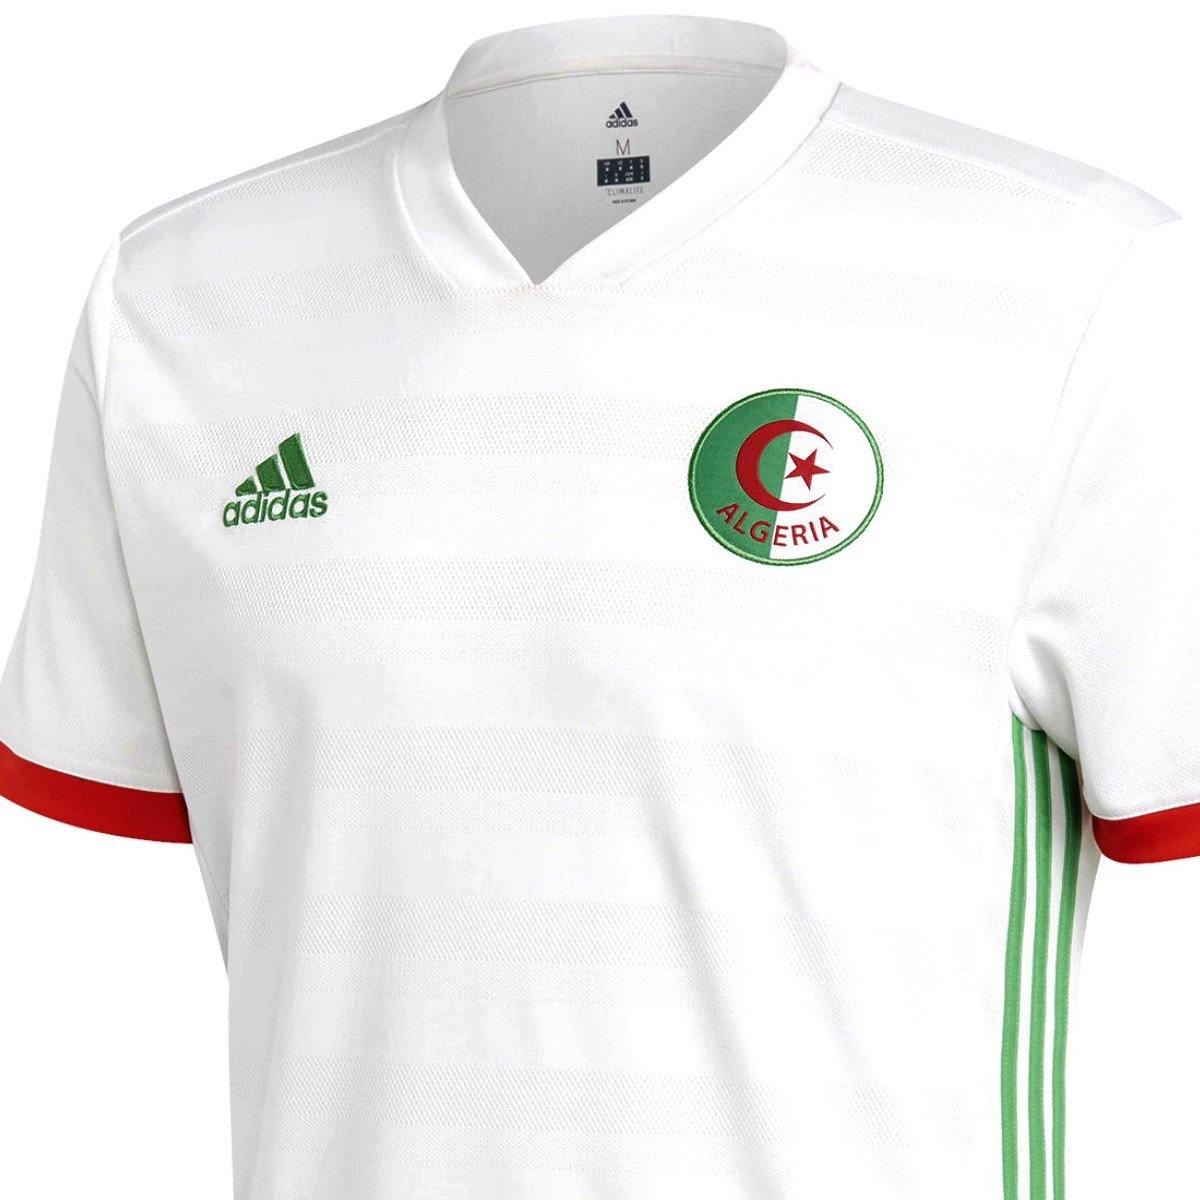 Algeria national soccer jersey - Adidas – SoccerTracksuits.com